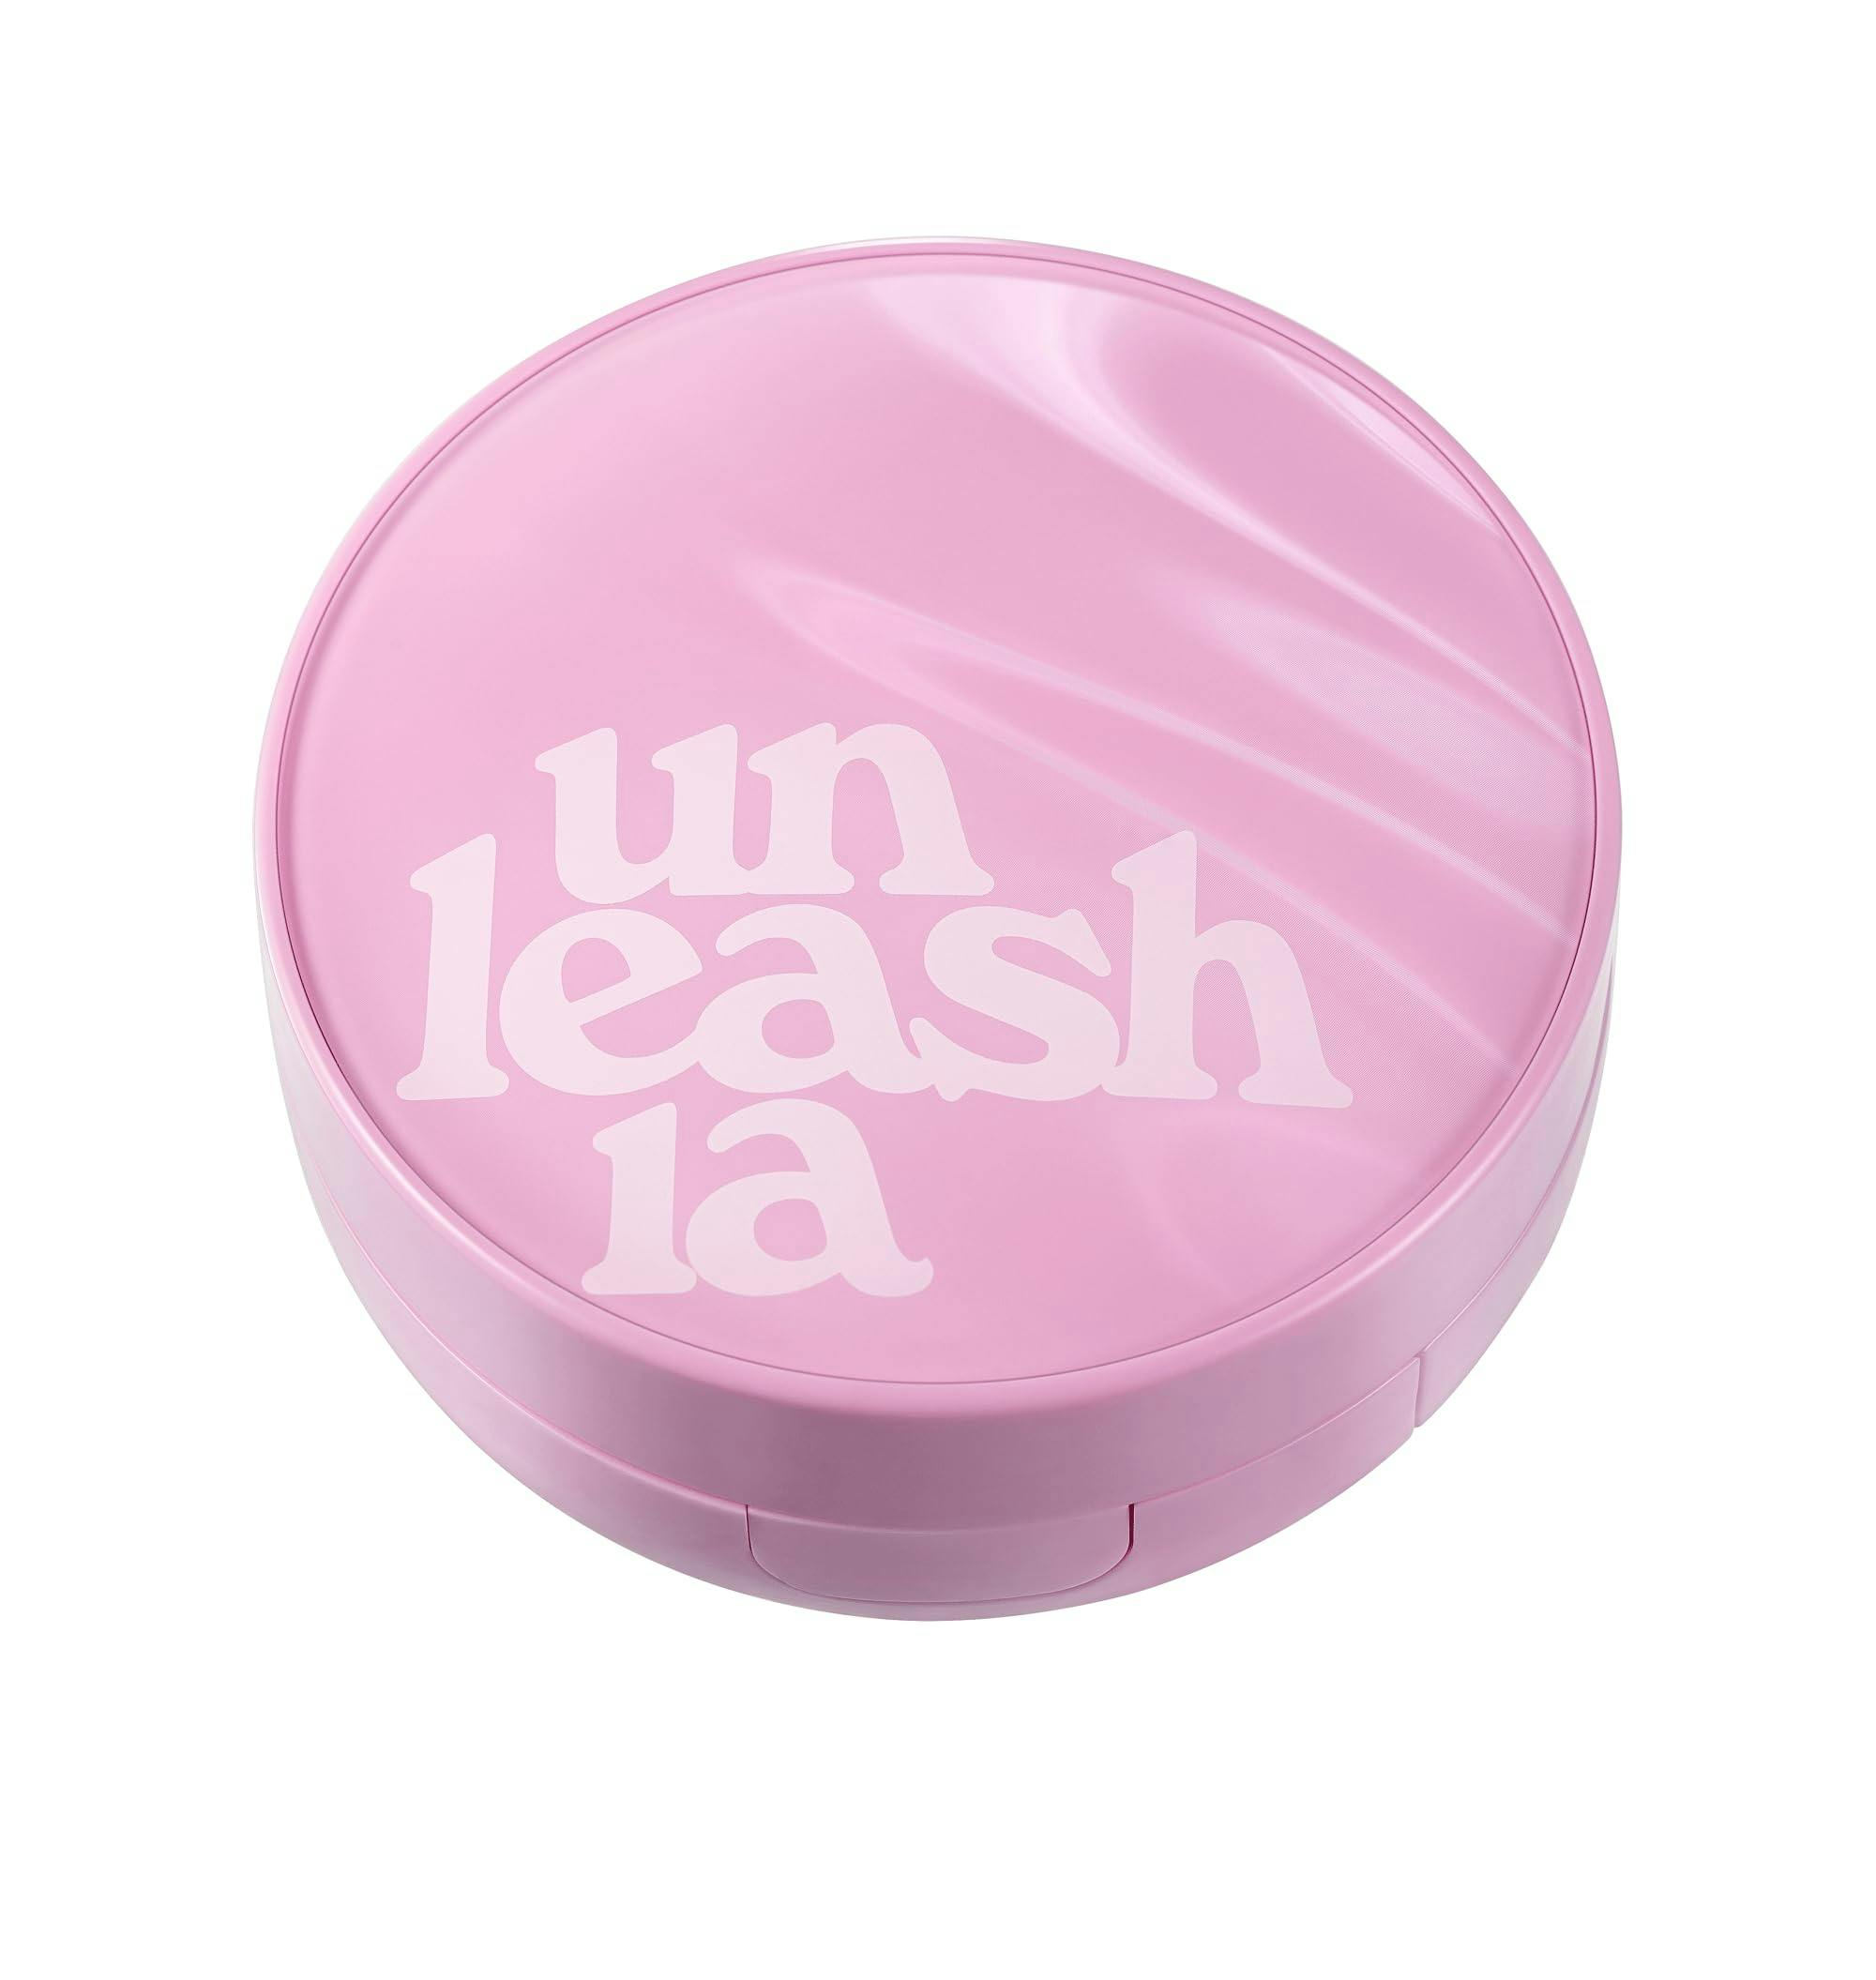 Unleashia Don't Touch Glass Pink Cushion SPF50+ PA++++ Тональний кушон